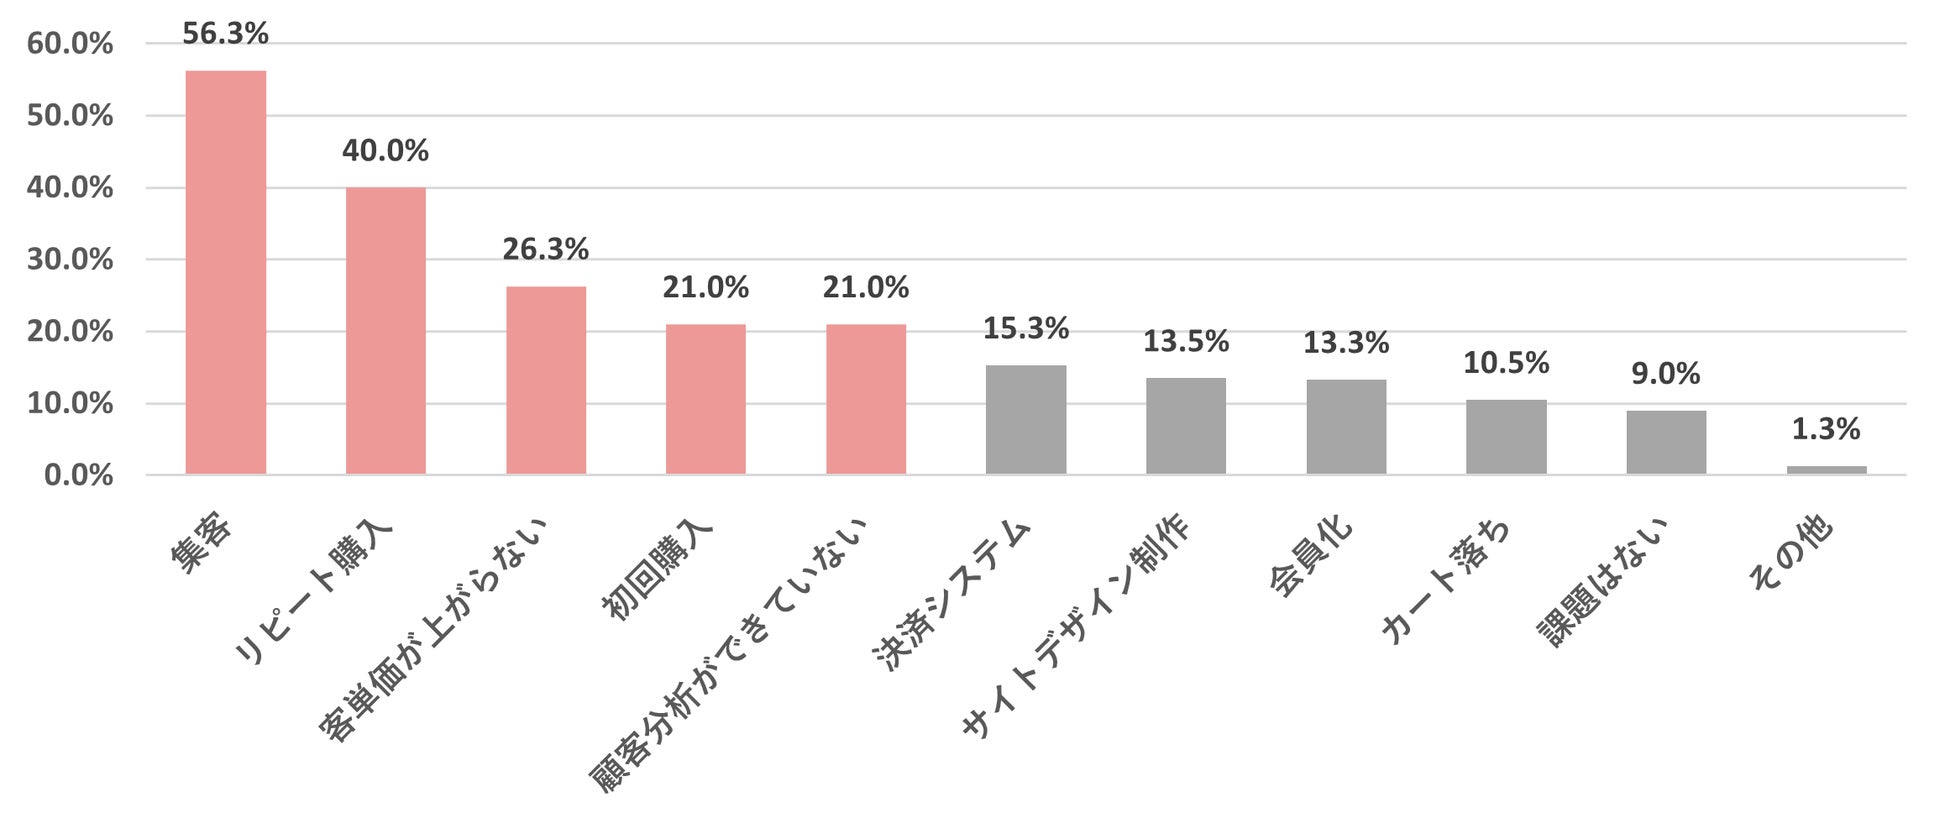 【ECサイト運営に関する課題を調査】EC事業者のCRMマーケティング課題として「集客（56.3%）」が最も高く、次いで「リピート購入（40.0%）」、「客単価の向上（26.3%）」という結果のサブ画像2